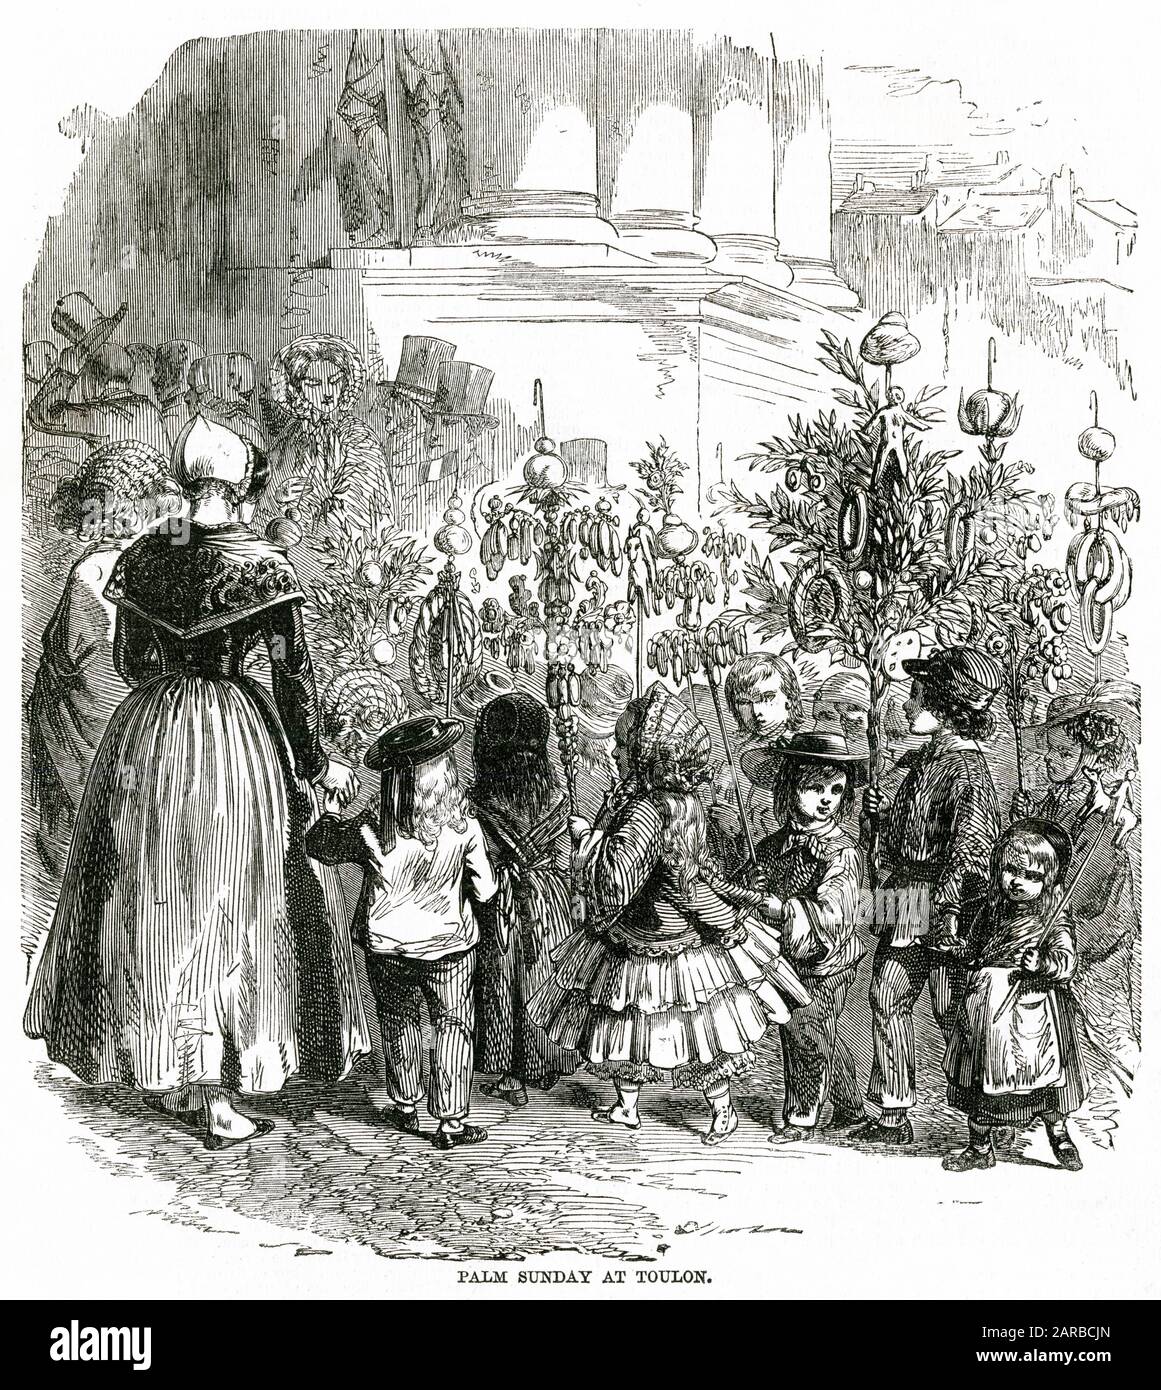 Palmsonntag in Toulon, Frankreich 1858 Stockfoto